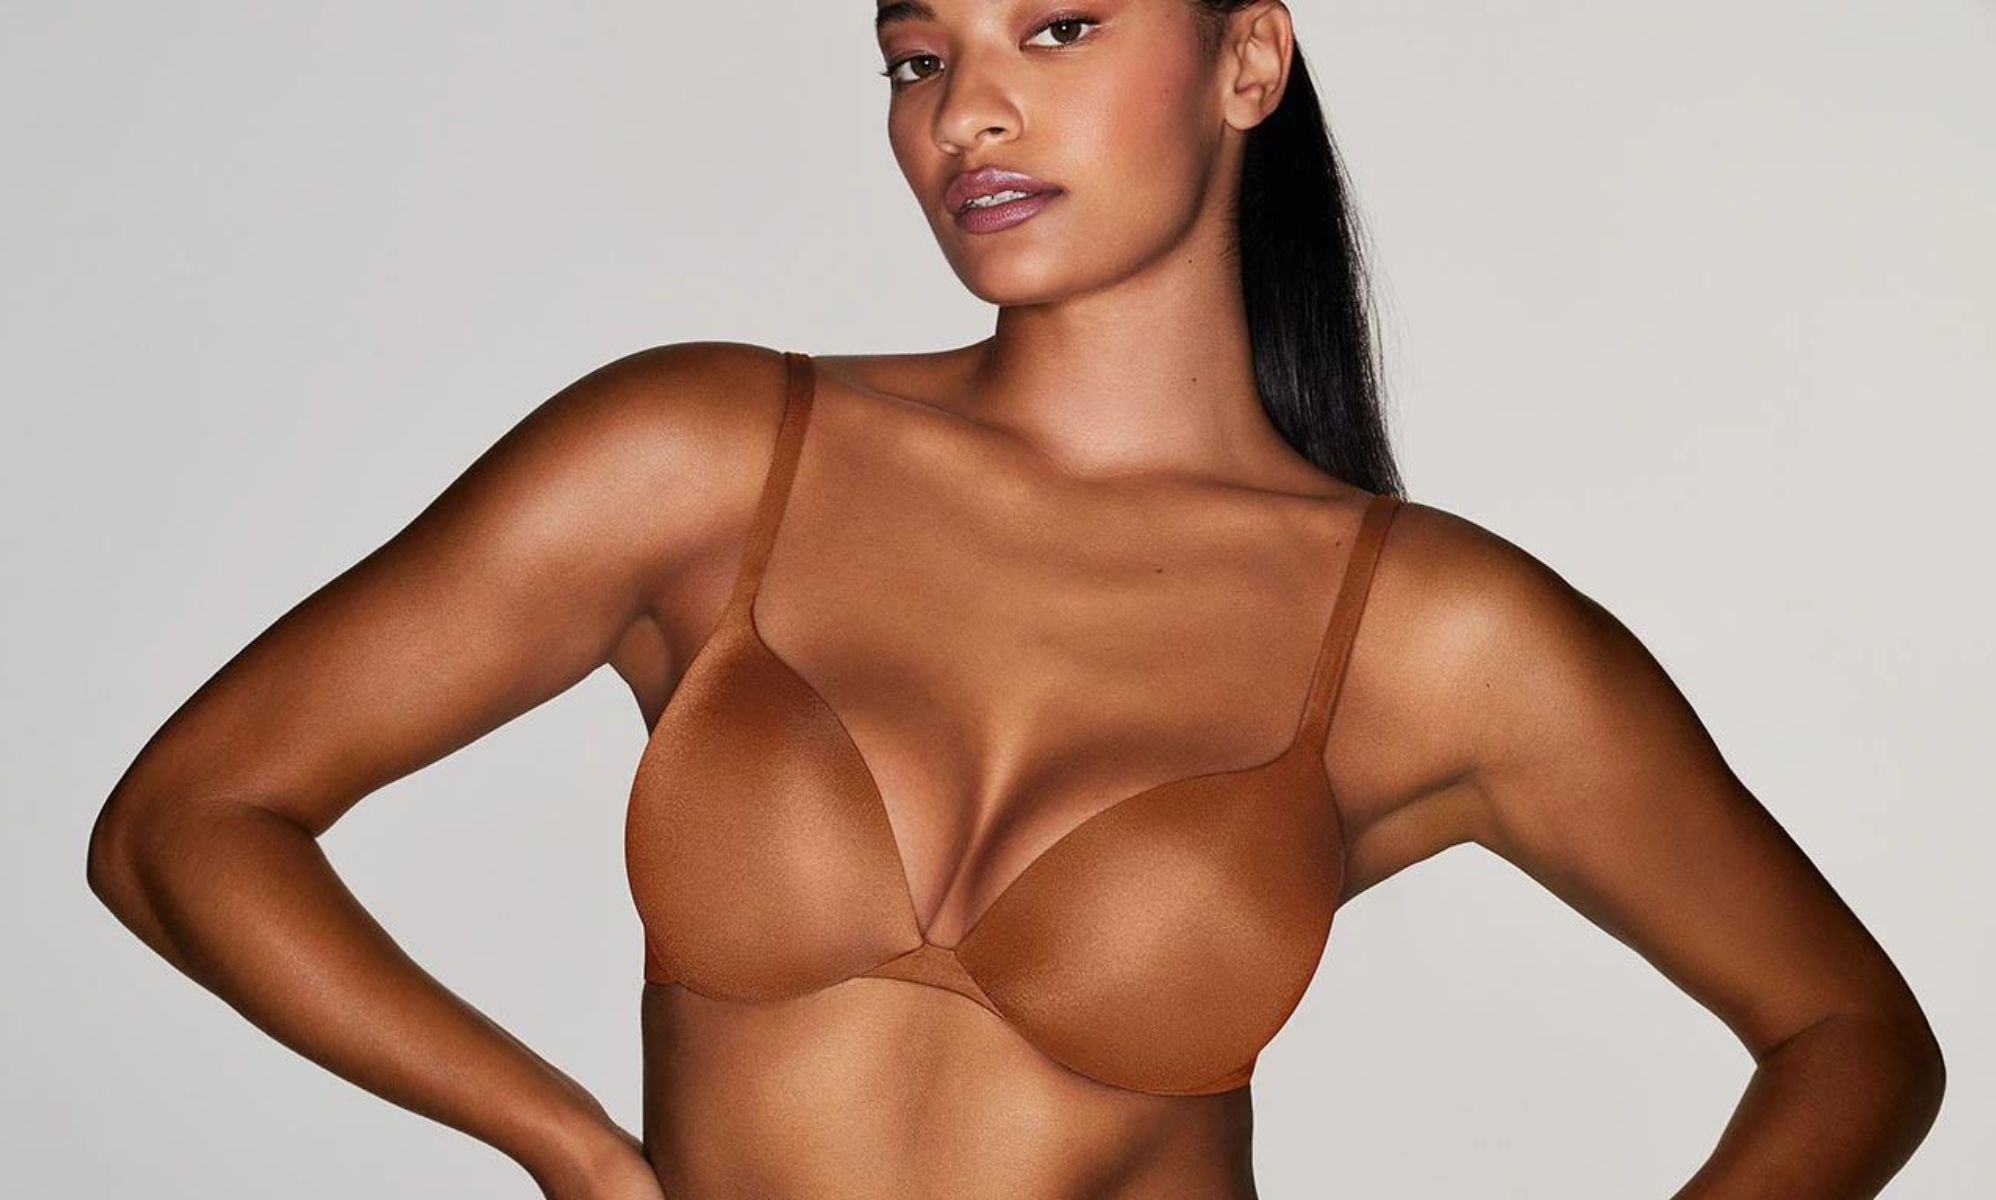 Kim Kardashian's Skims nipple bra is getting backlash, but breast